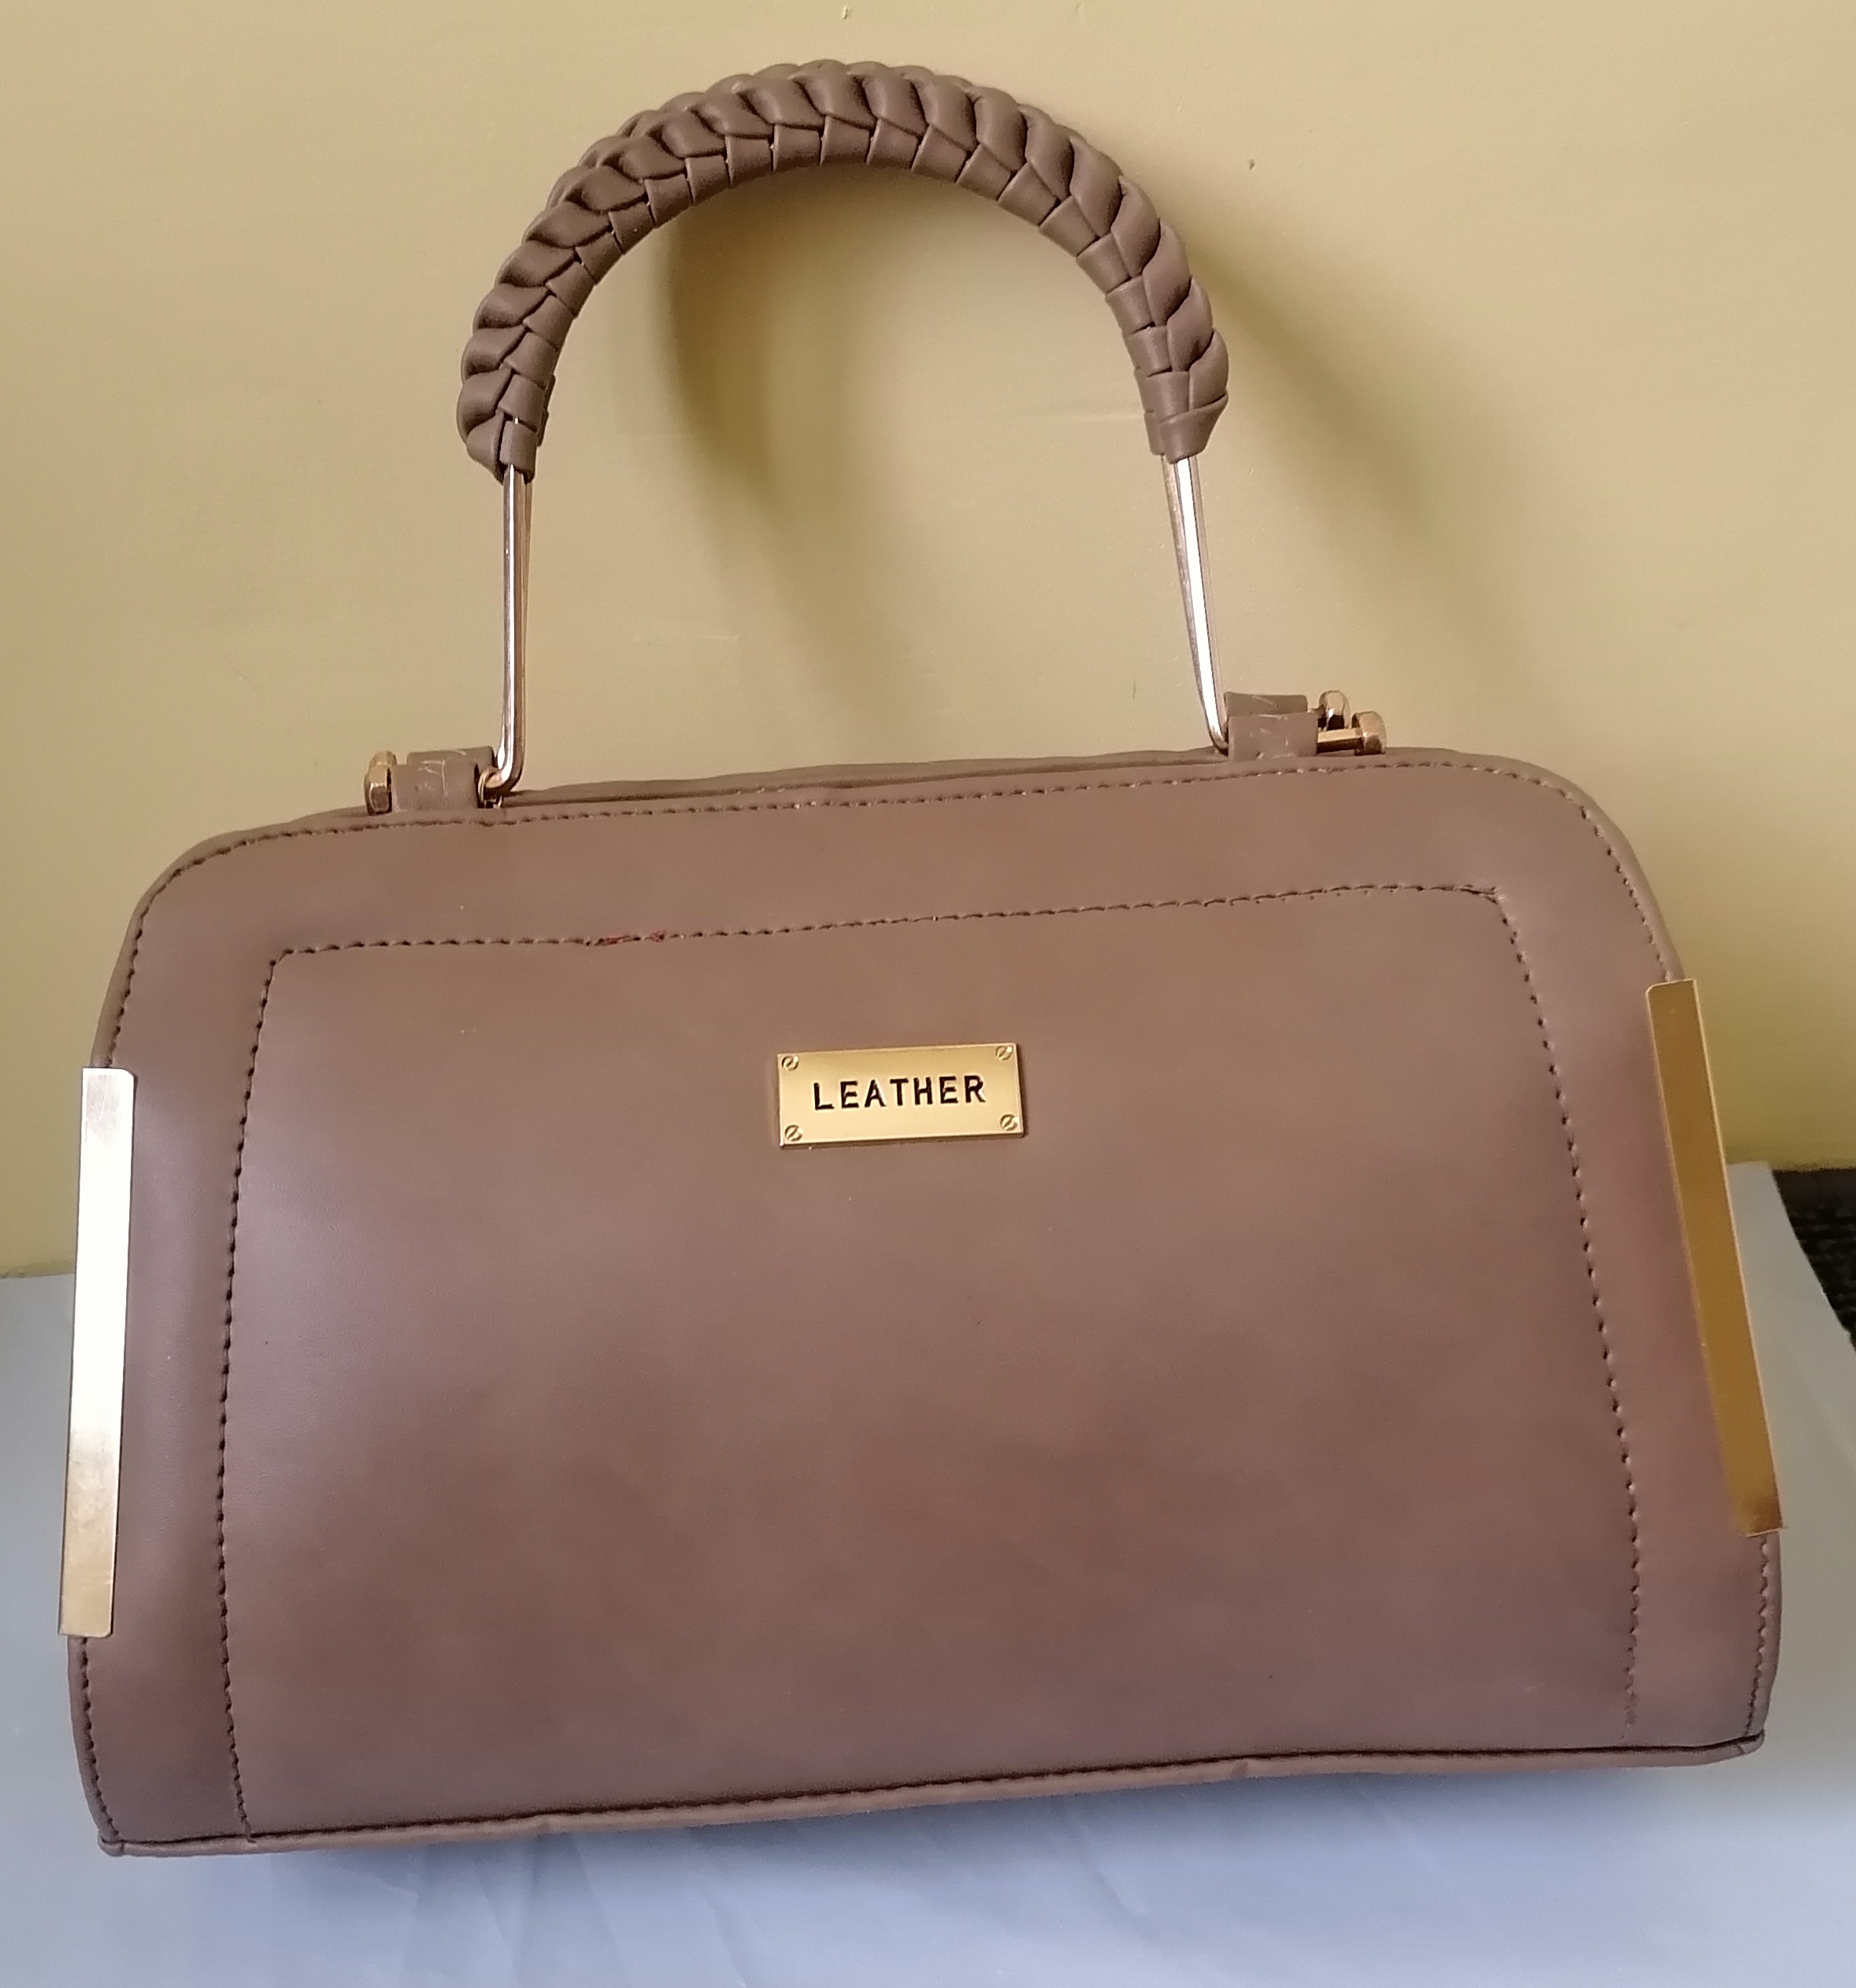 b blues Handbags Price 550 Cross Body Hand Bag, 400 Gms, Size: 8